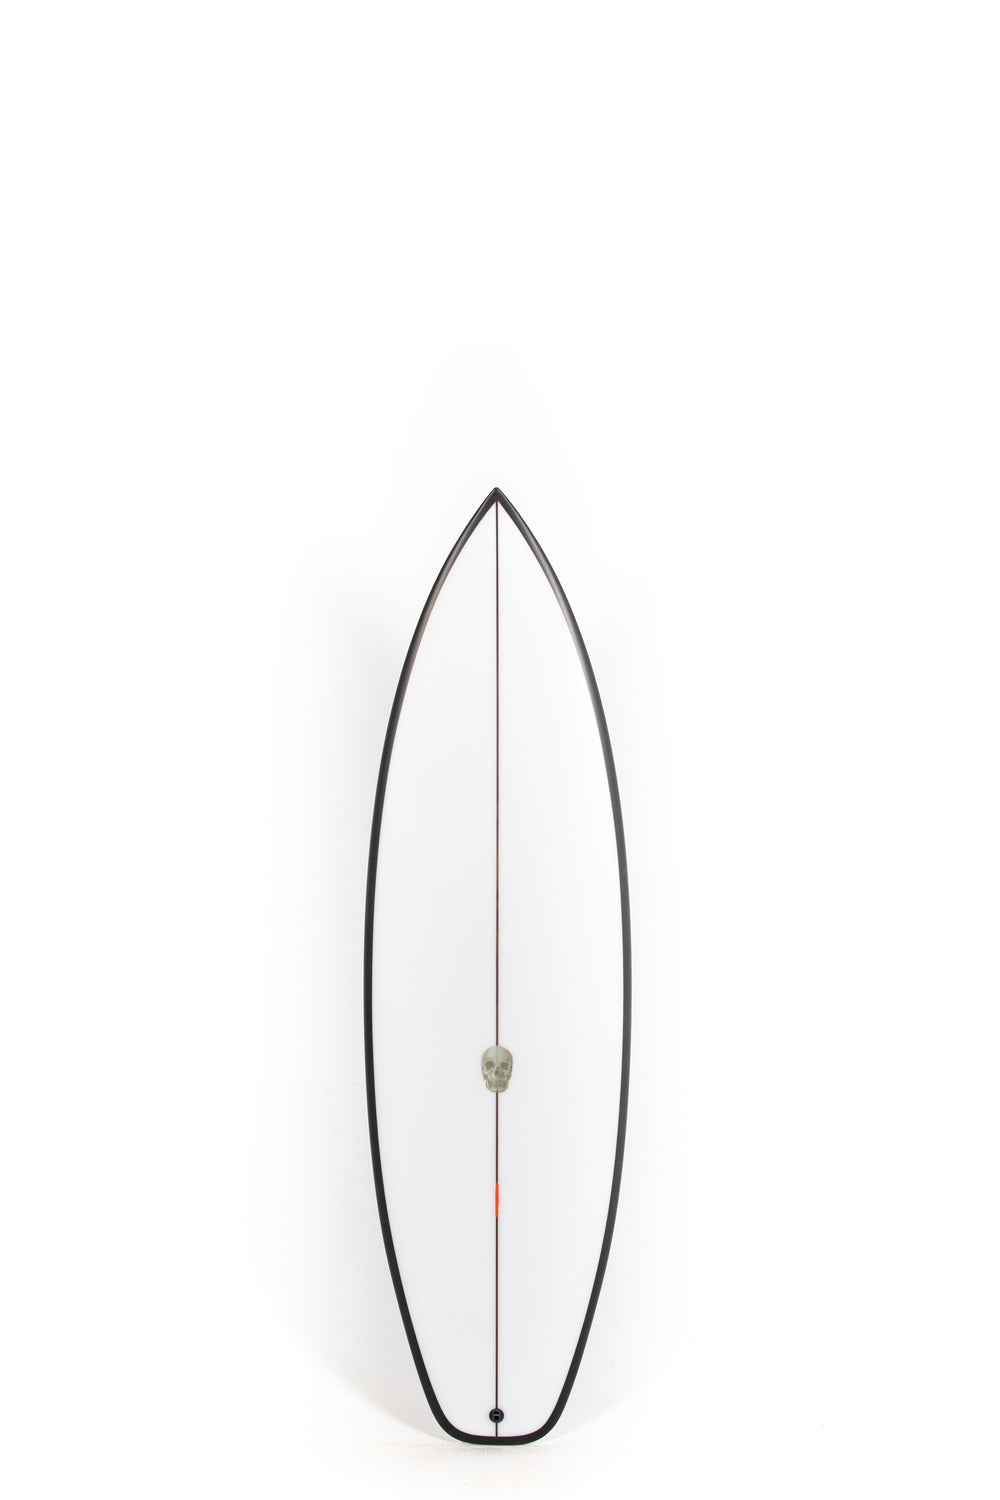 Pukas Surf Shop - Christenson Surfboards - OP2 - 5'8